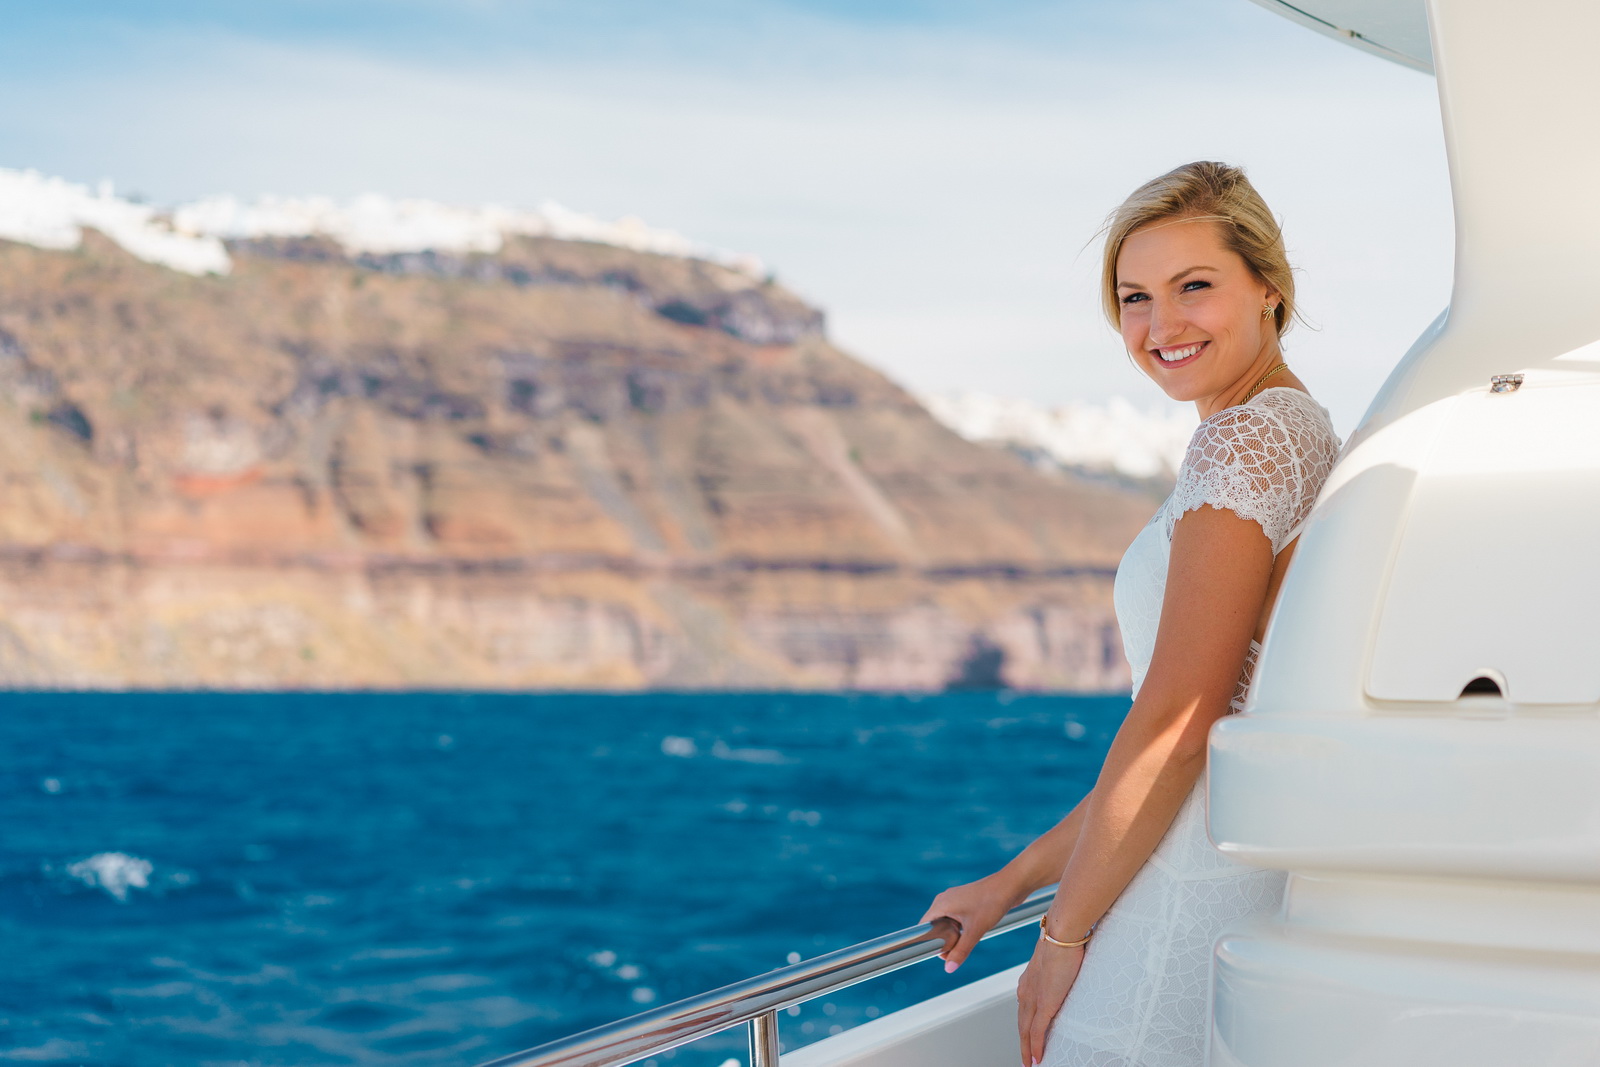 Renting an elegant yacht for your best adventurous wedding ceremony or honeymoon travel: свадьба на санторини, свадебное агентство Julia Veselova - Фото 3